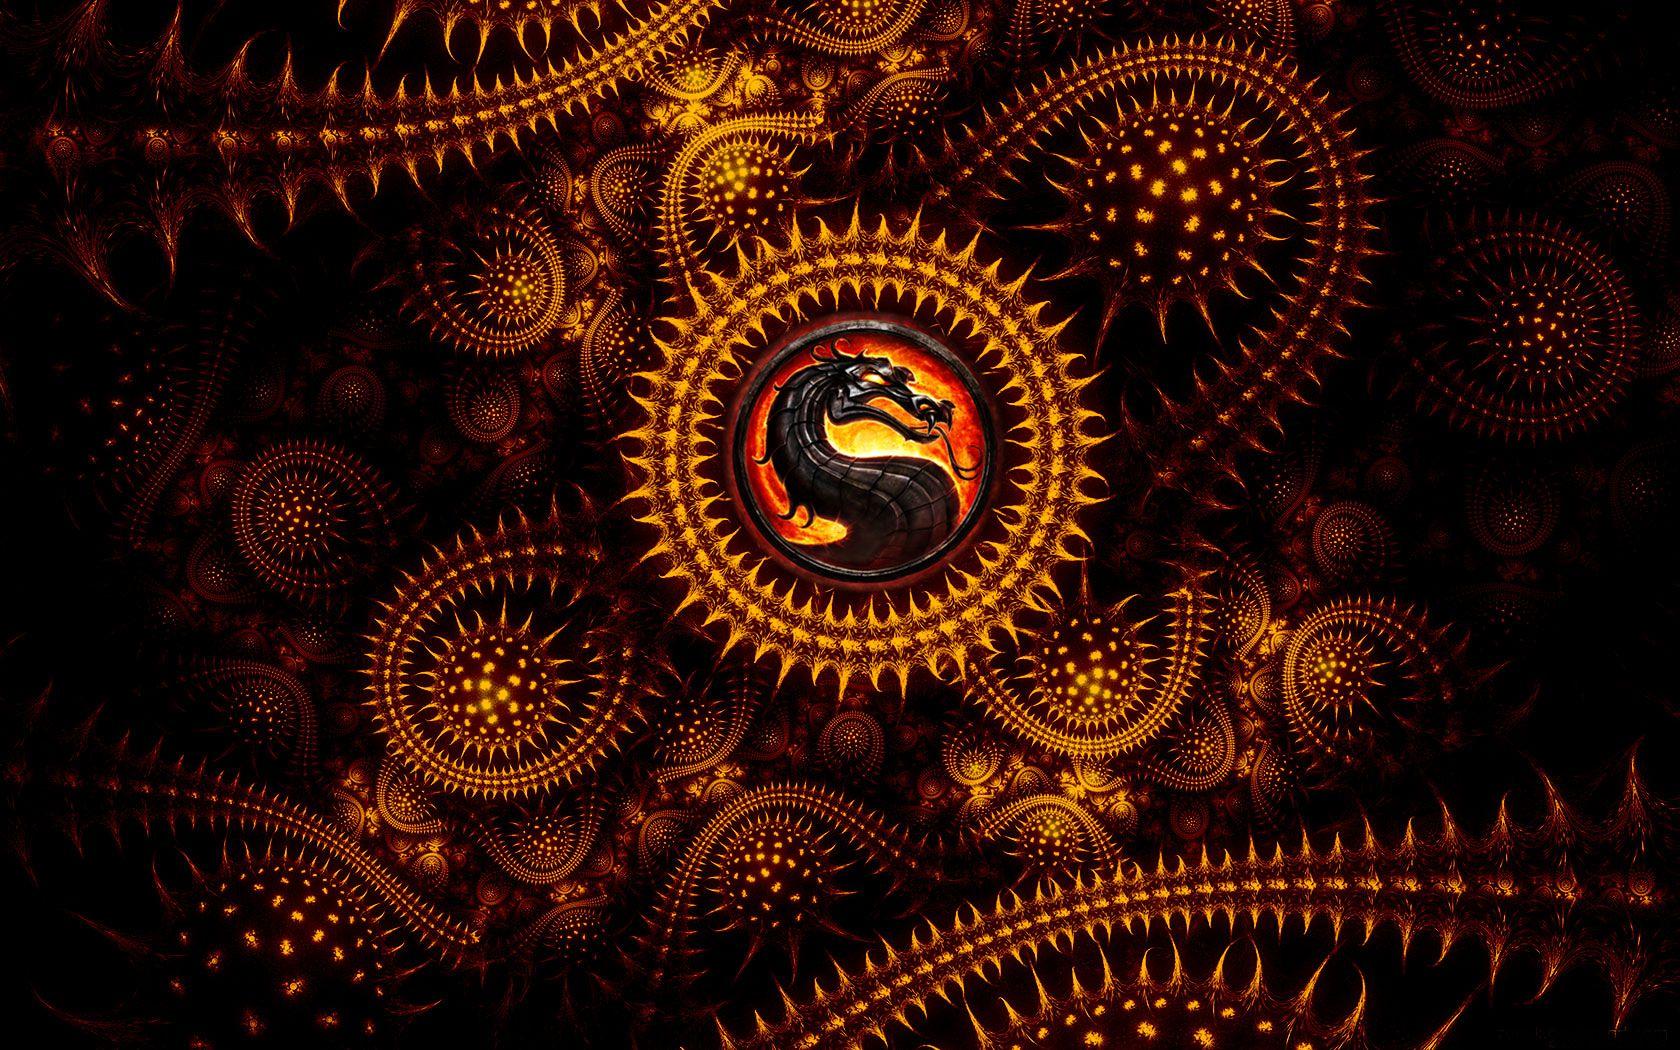 Mortal Kombat Dragon Logo Wallpapers Hd Wallpaper Cave